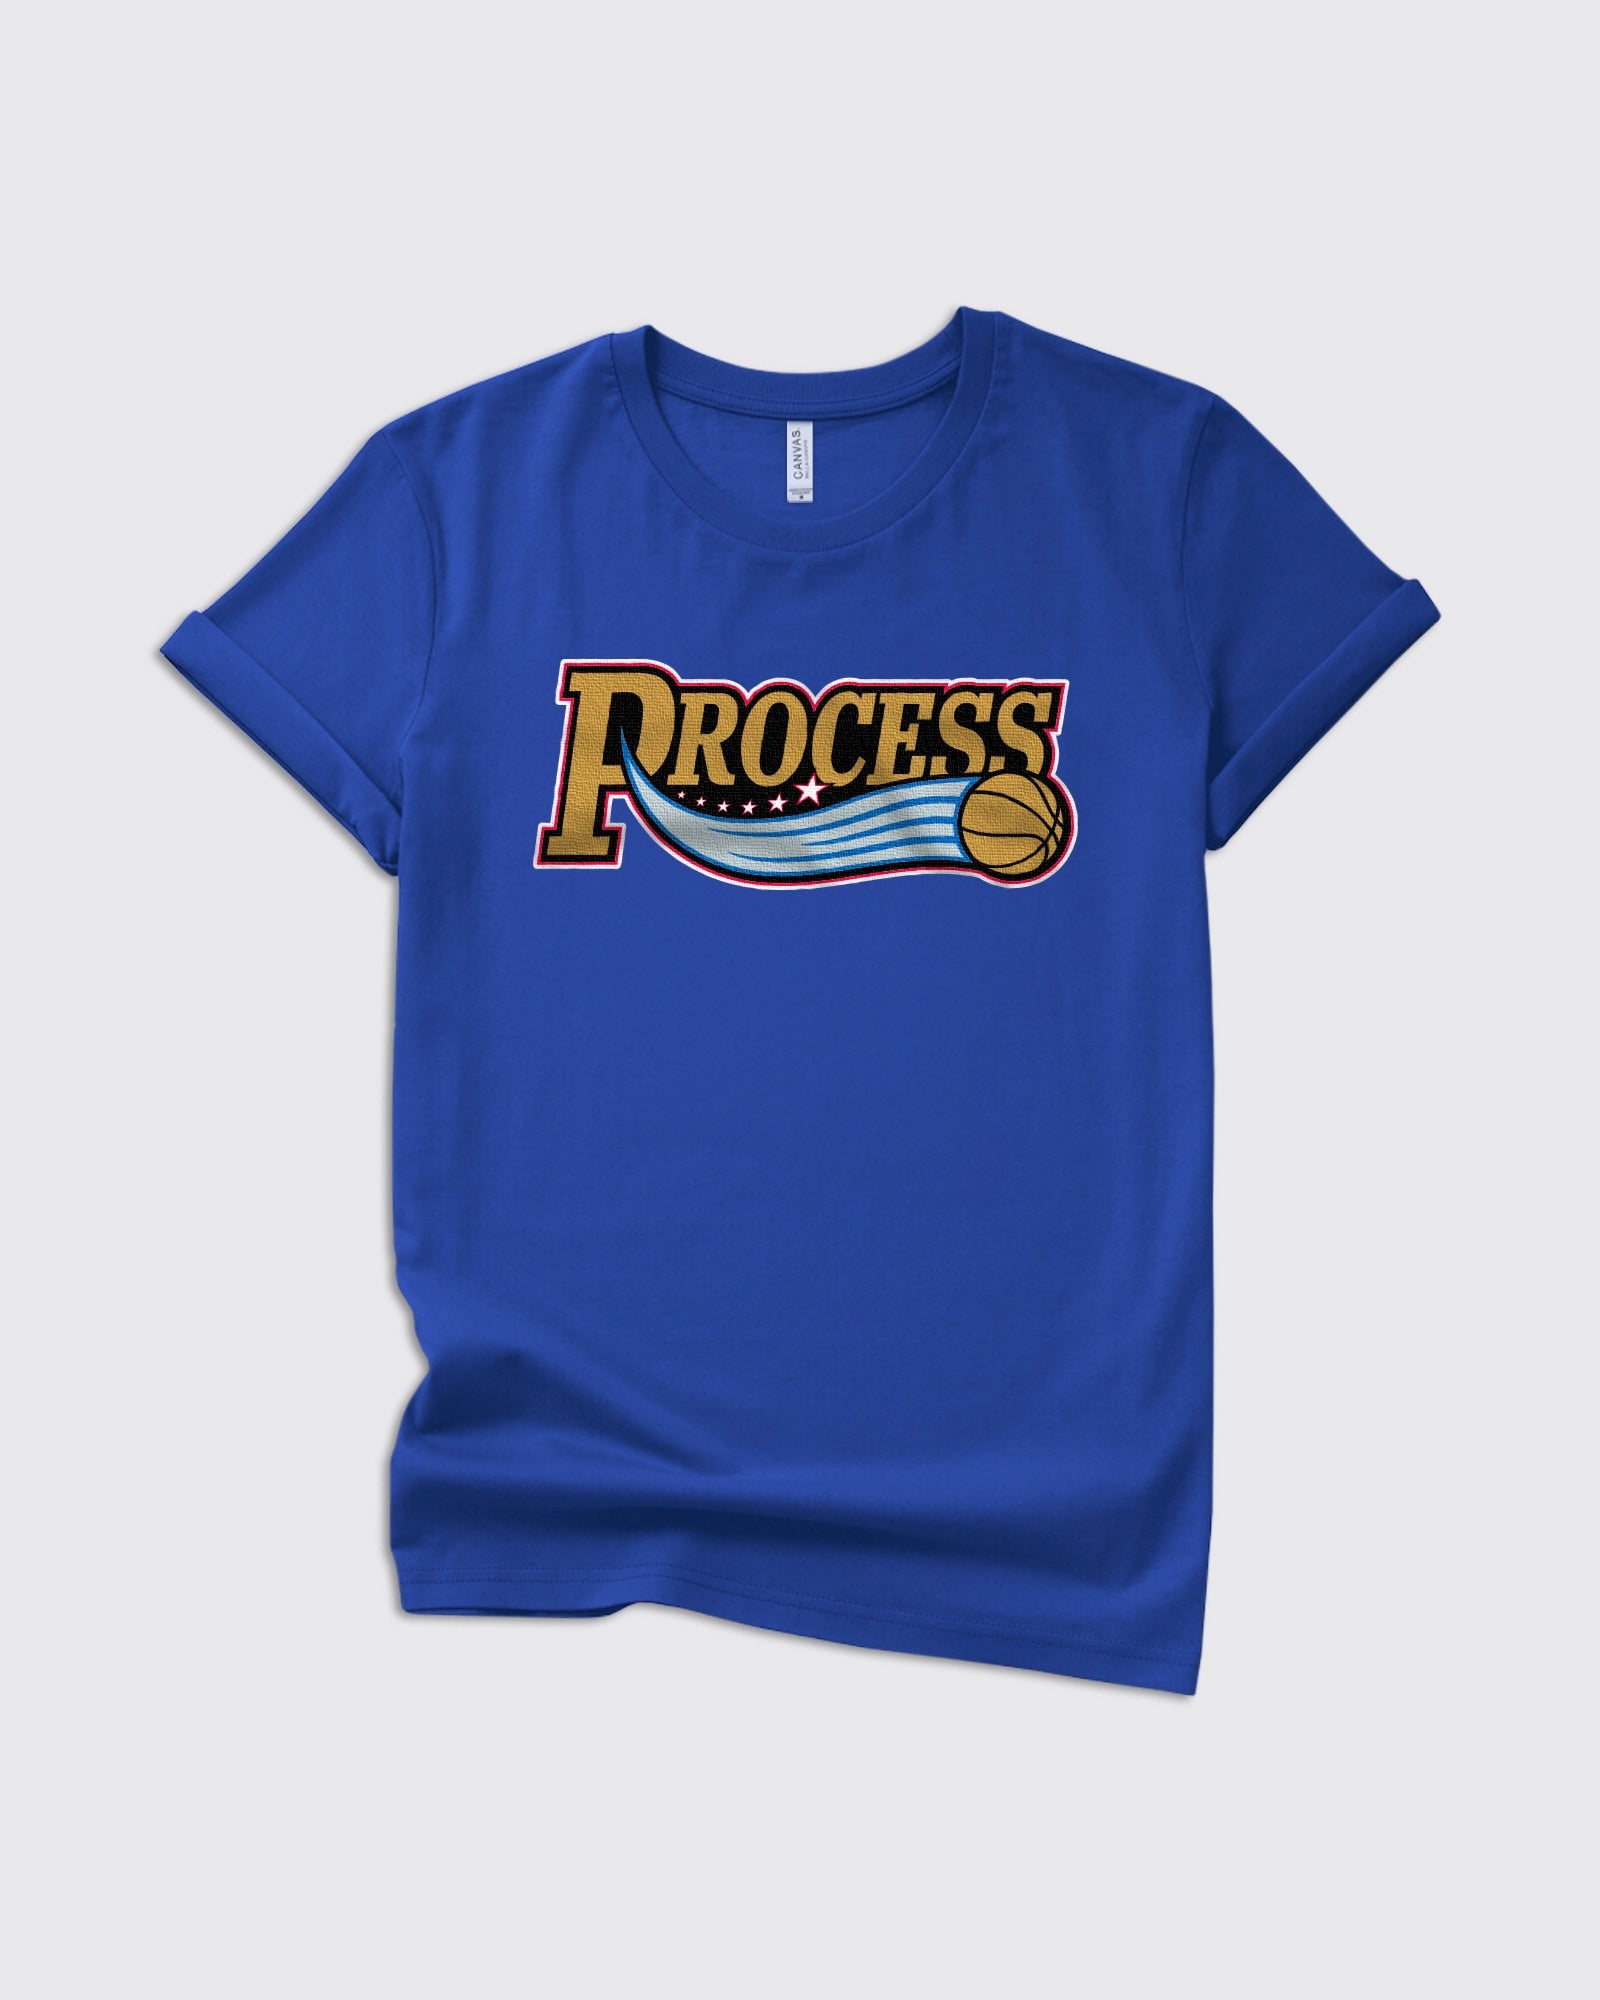 Kids Trust The Process Shirt - 76ers, Kids, T-Shirts - Philly Sports Shirts